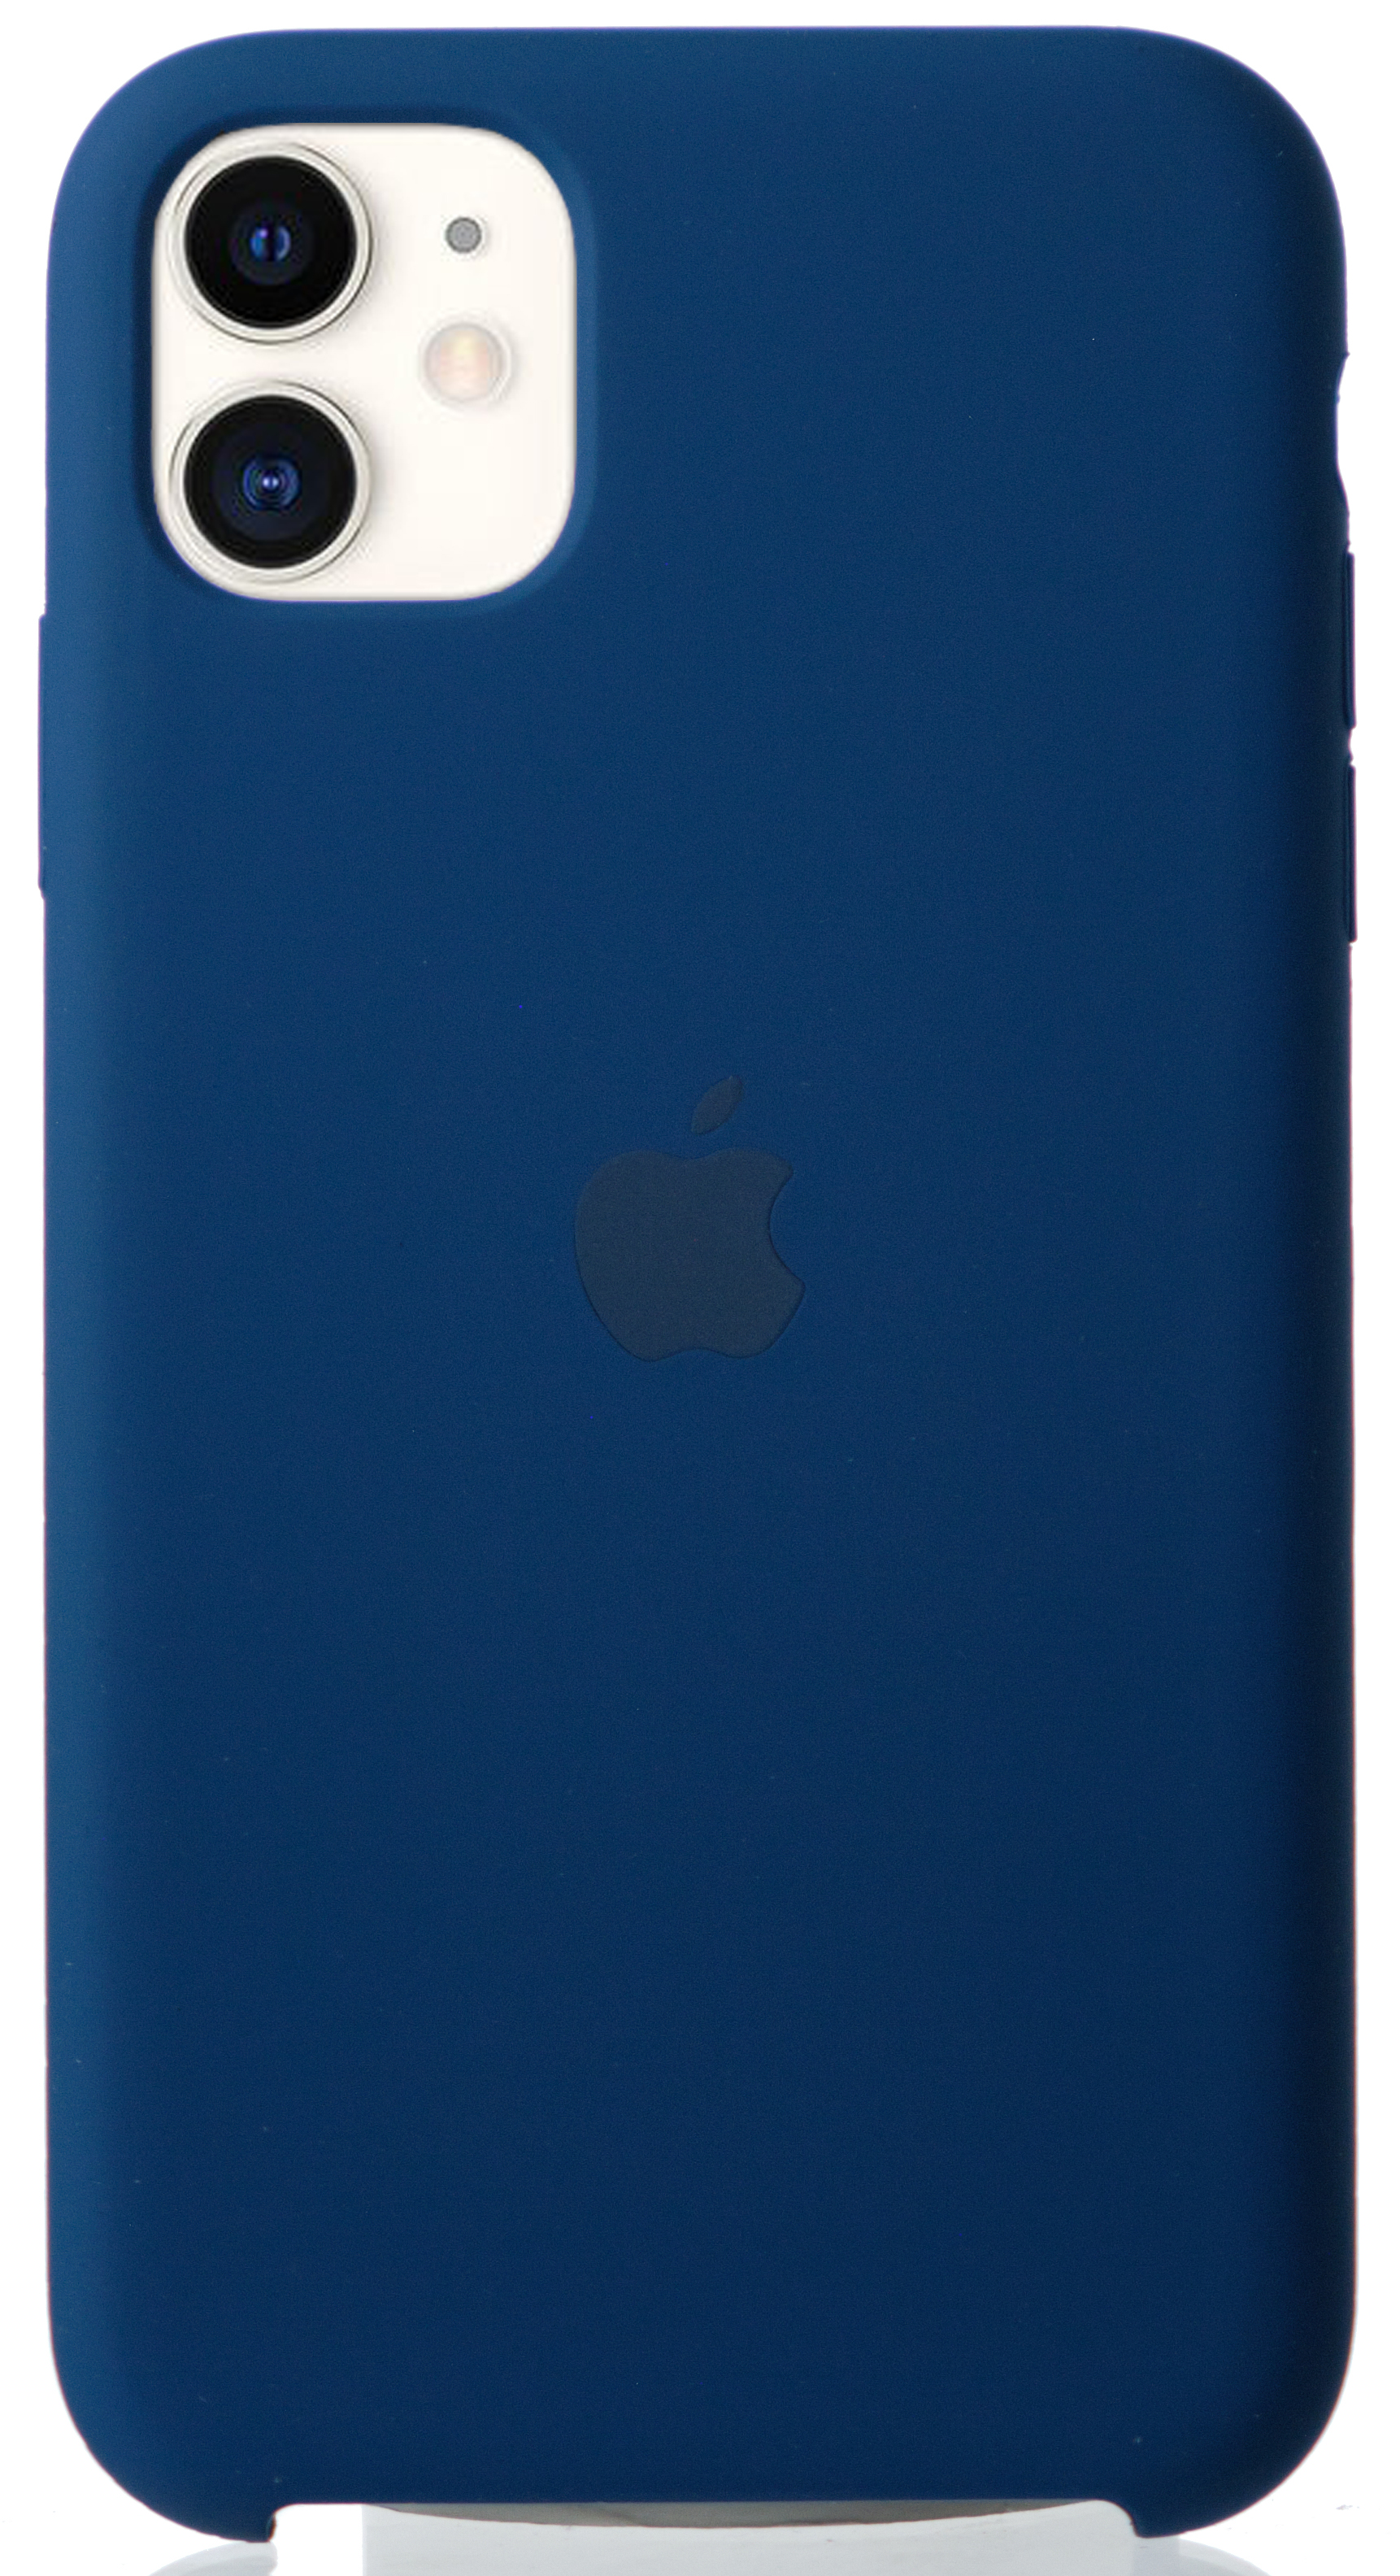 Чехол Silicone Case для iPhone 11 синий